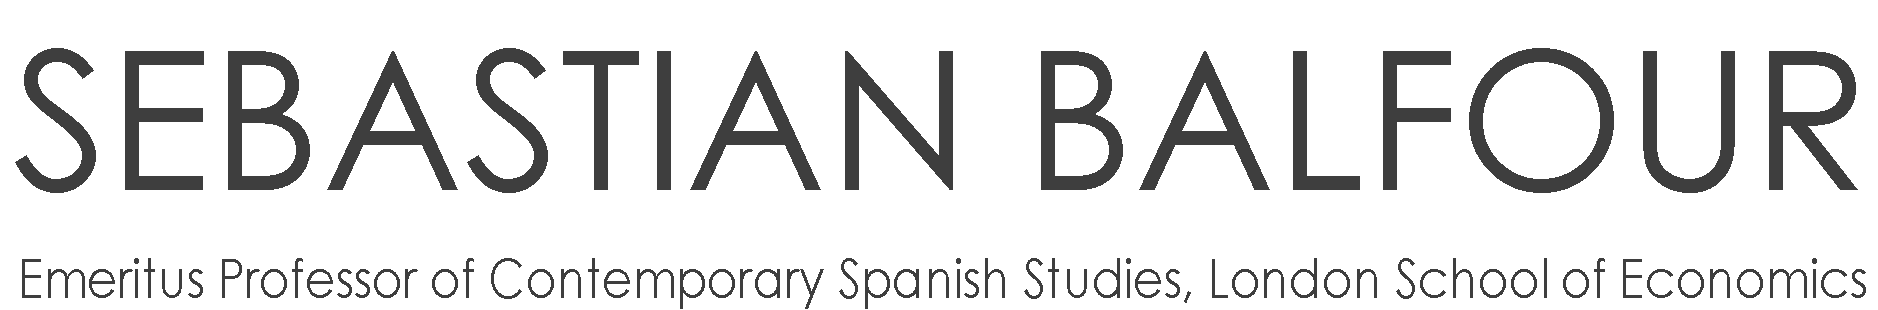 Sebastian Balfour | Emeritus Professor Contemporary Spanish Studies Logo